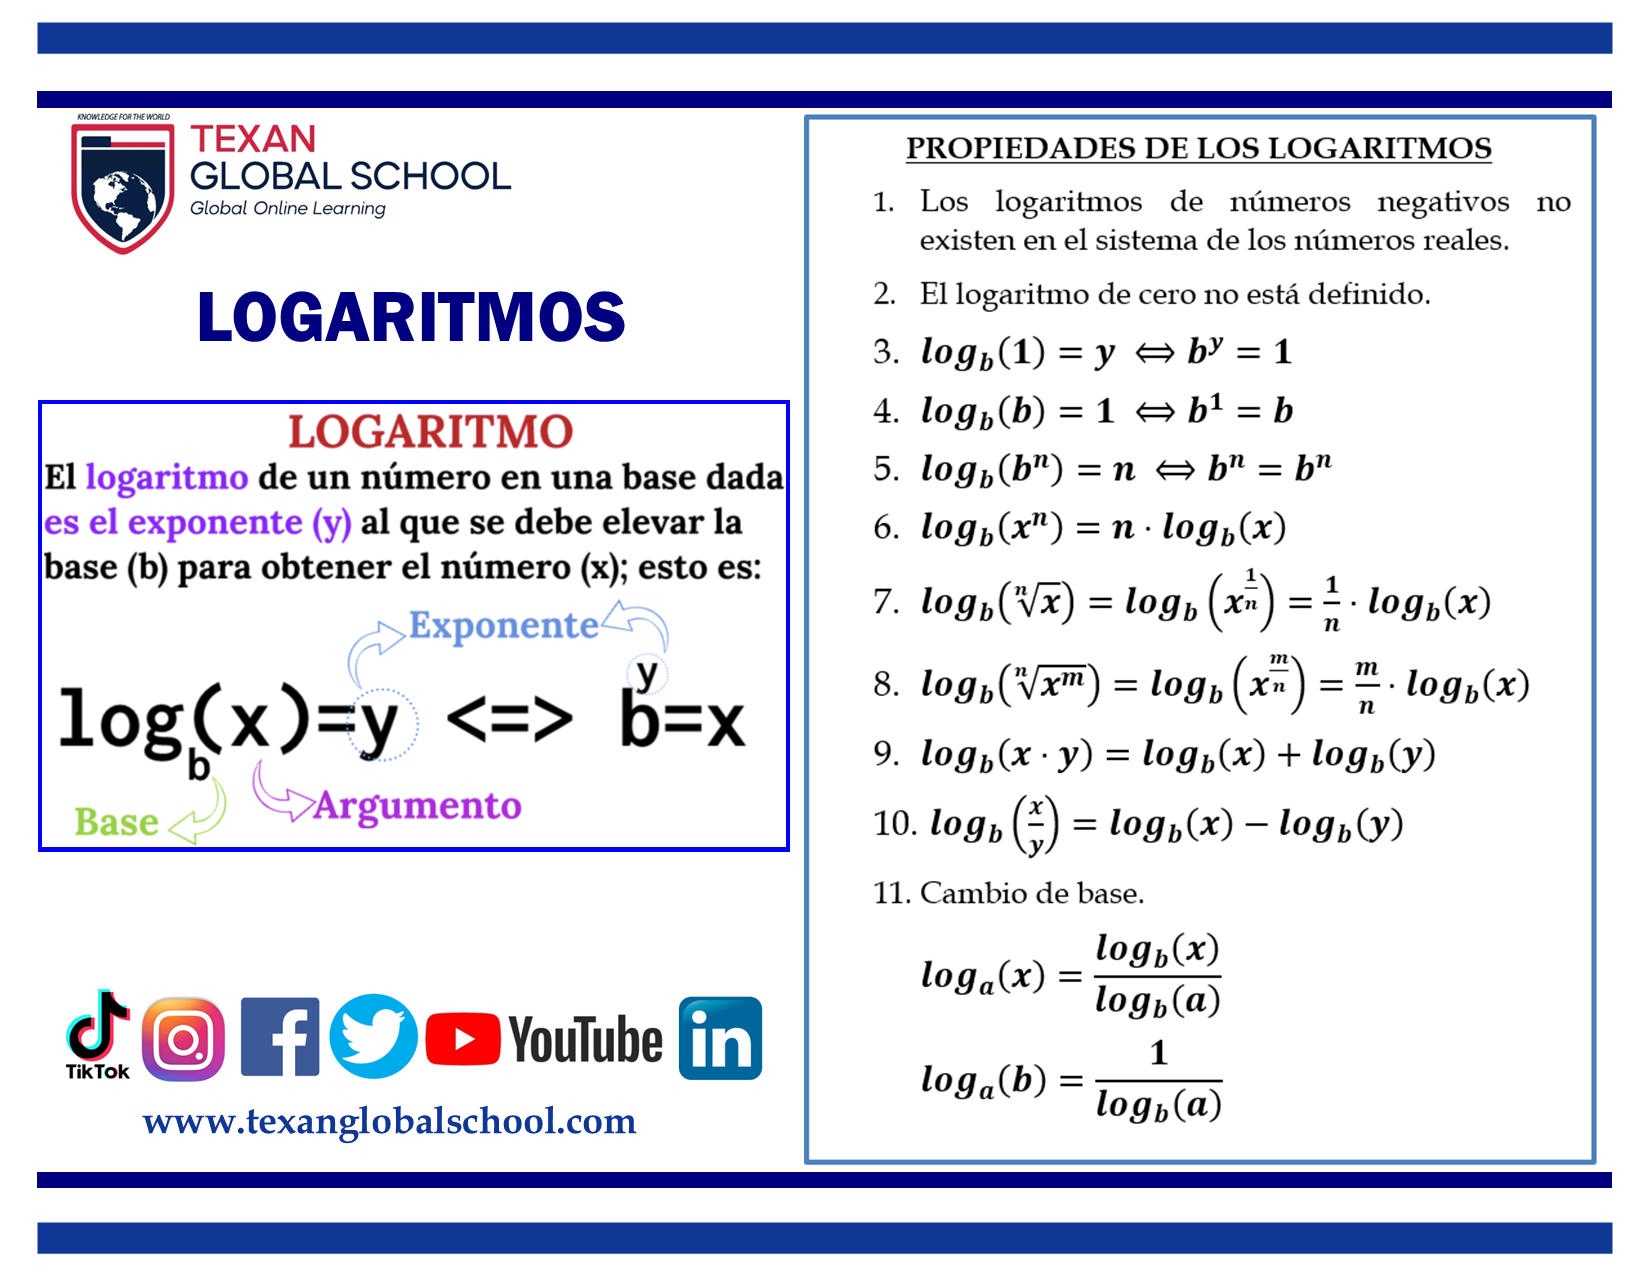 Logaritmos 1